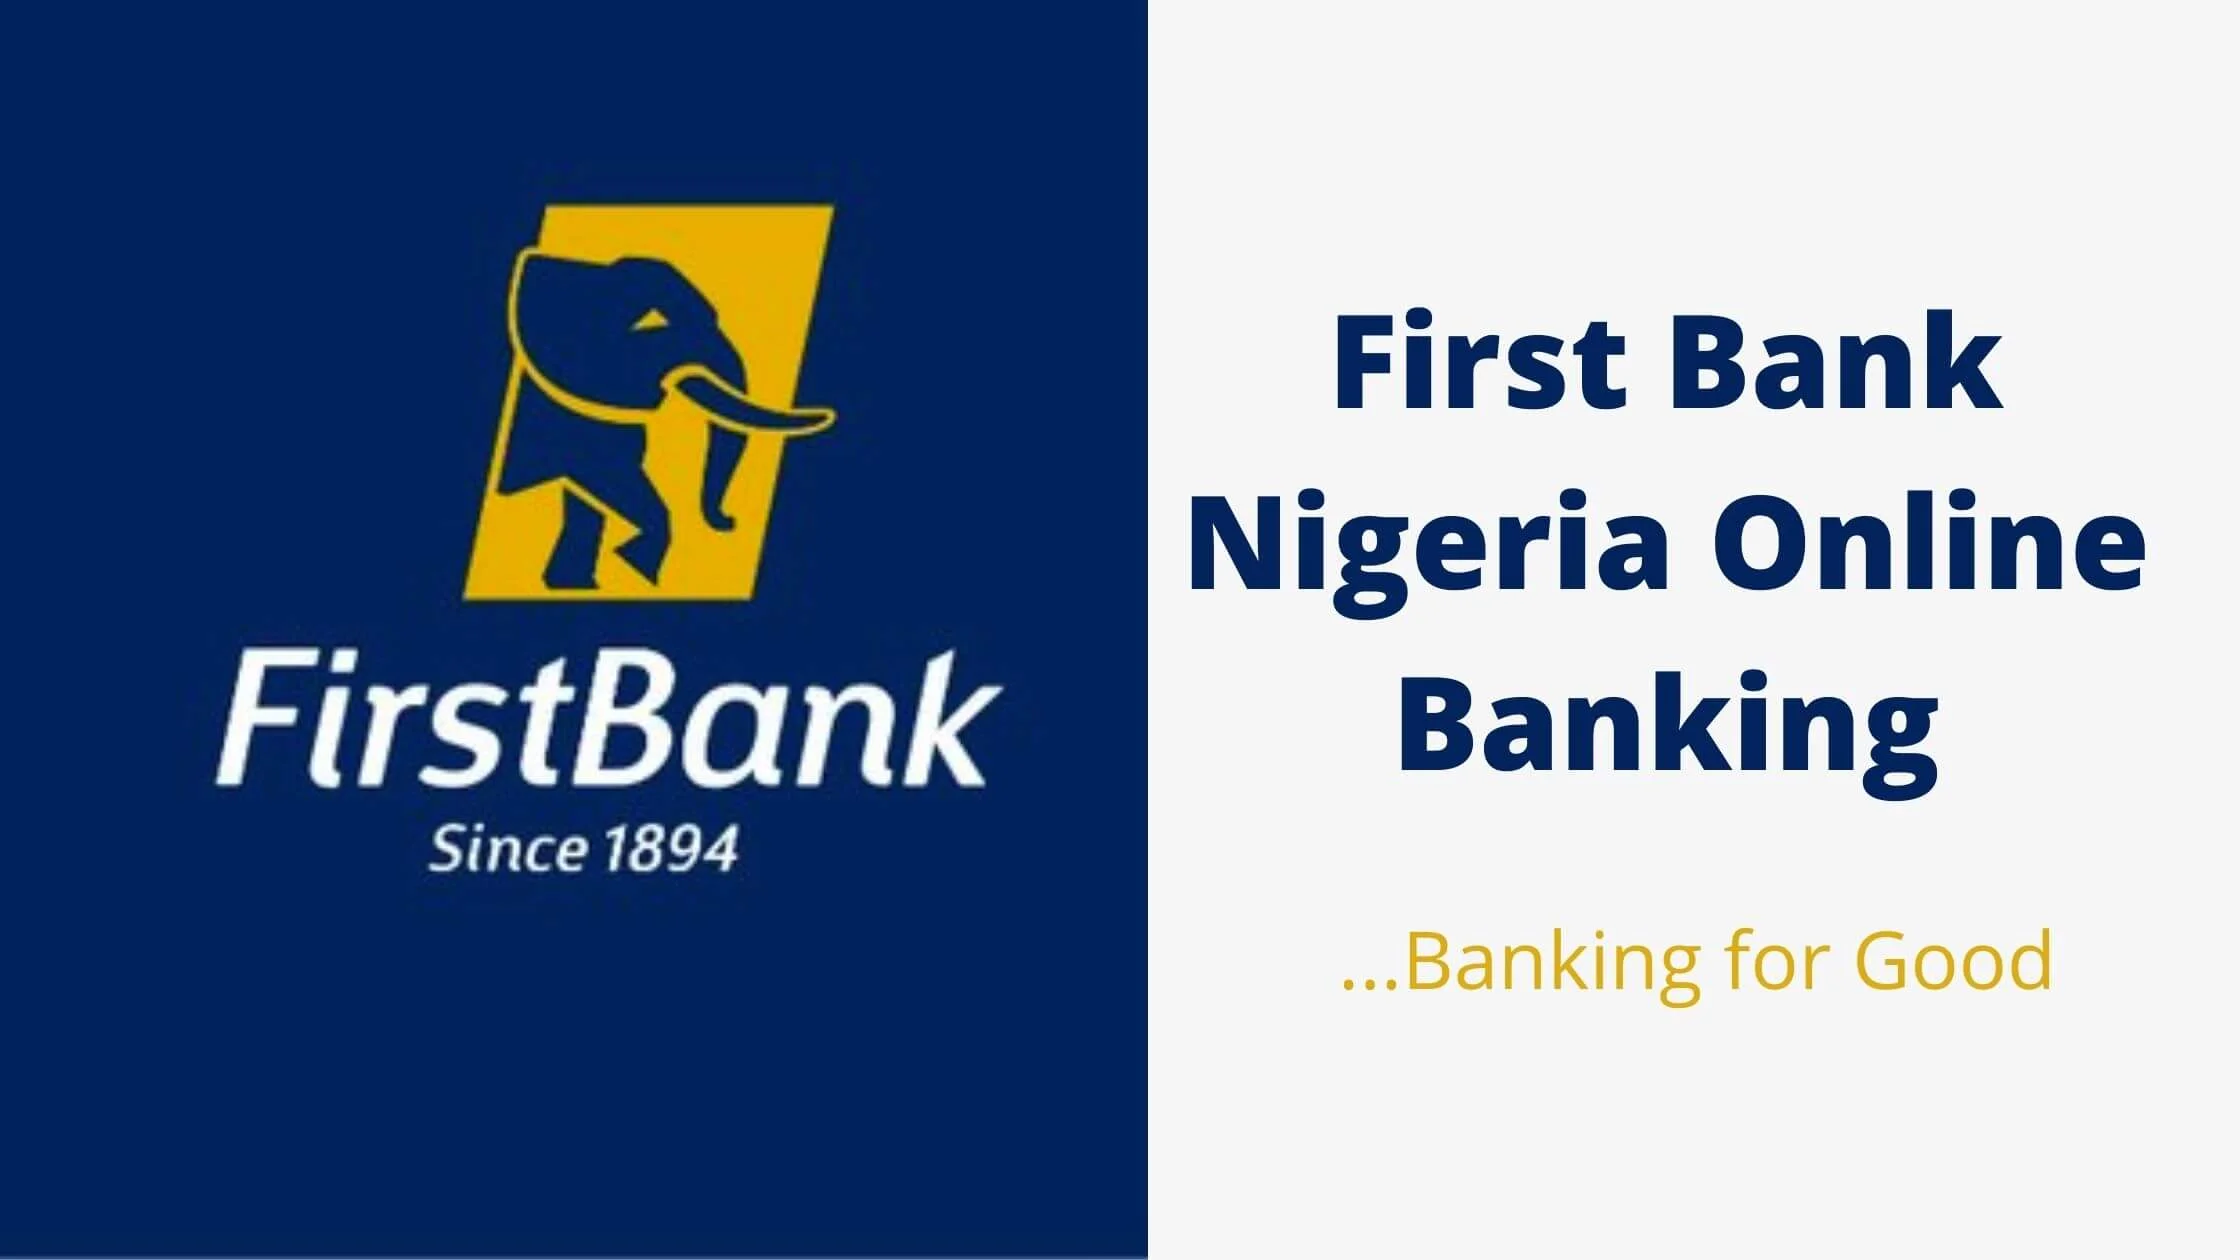 First Bank Nigeria Online Banking